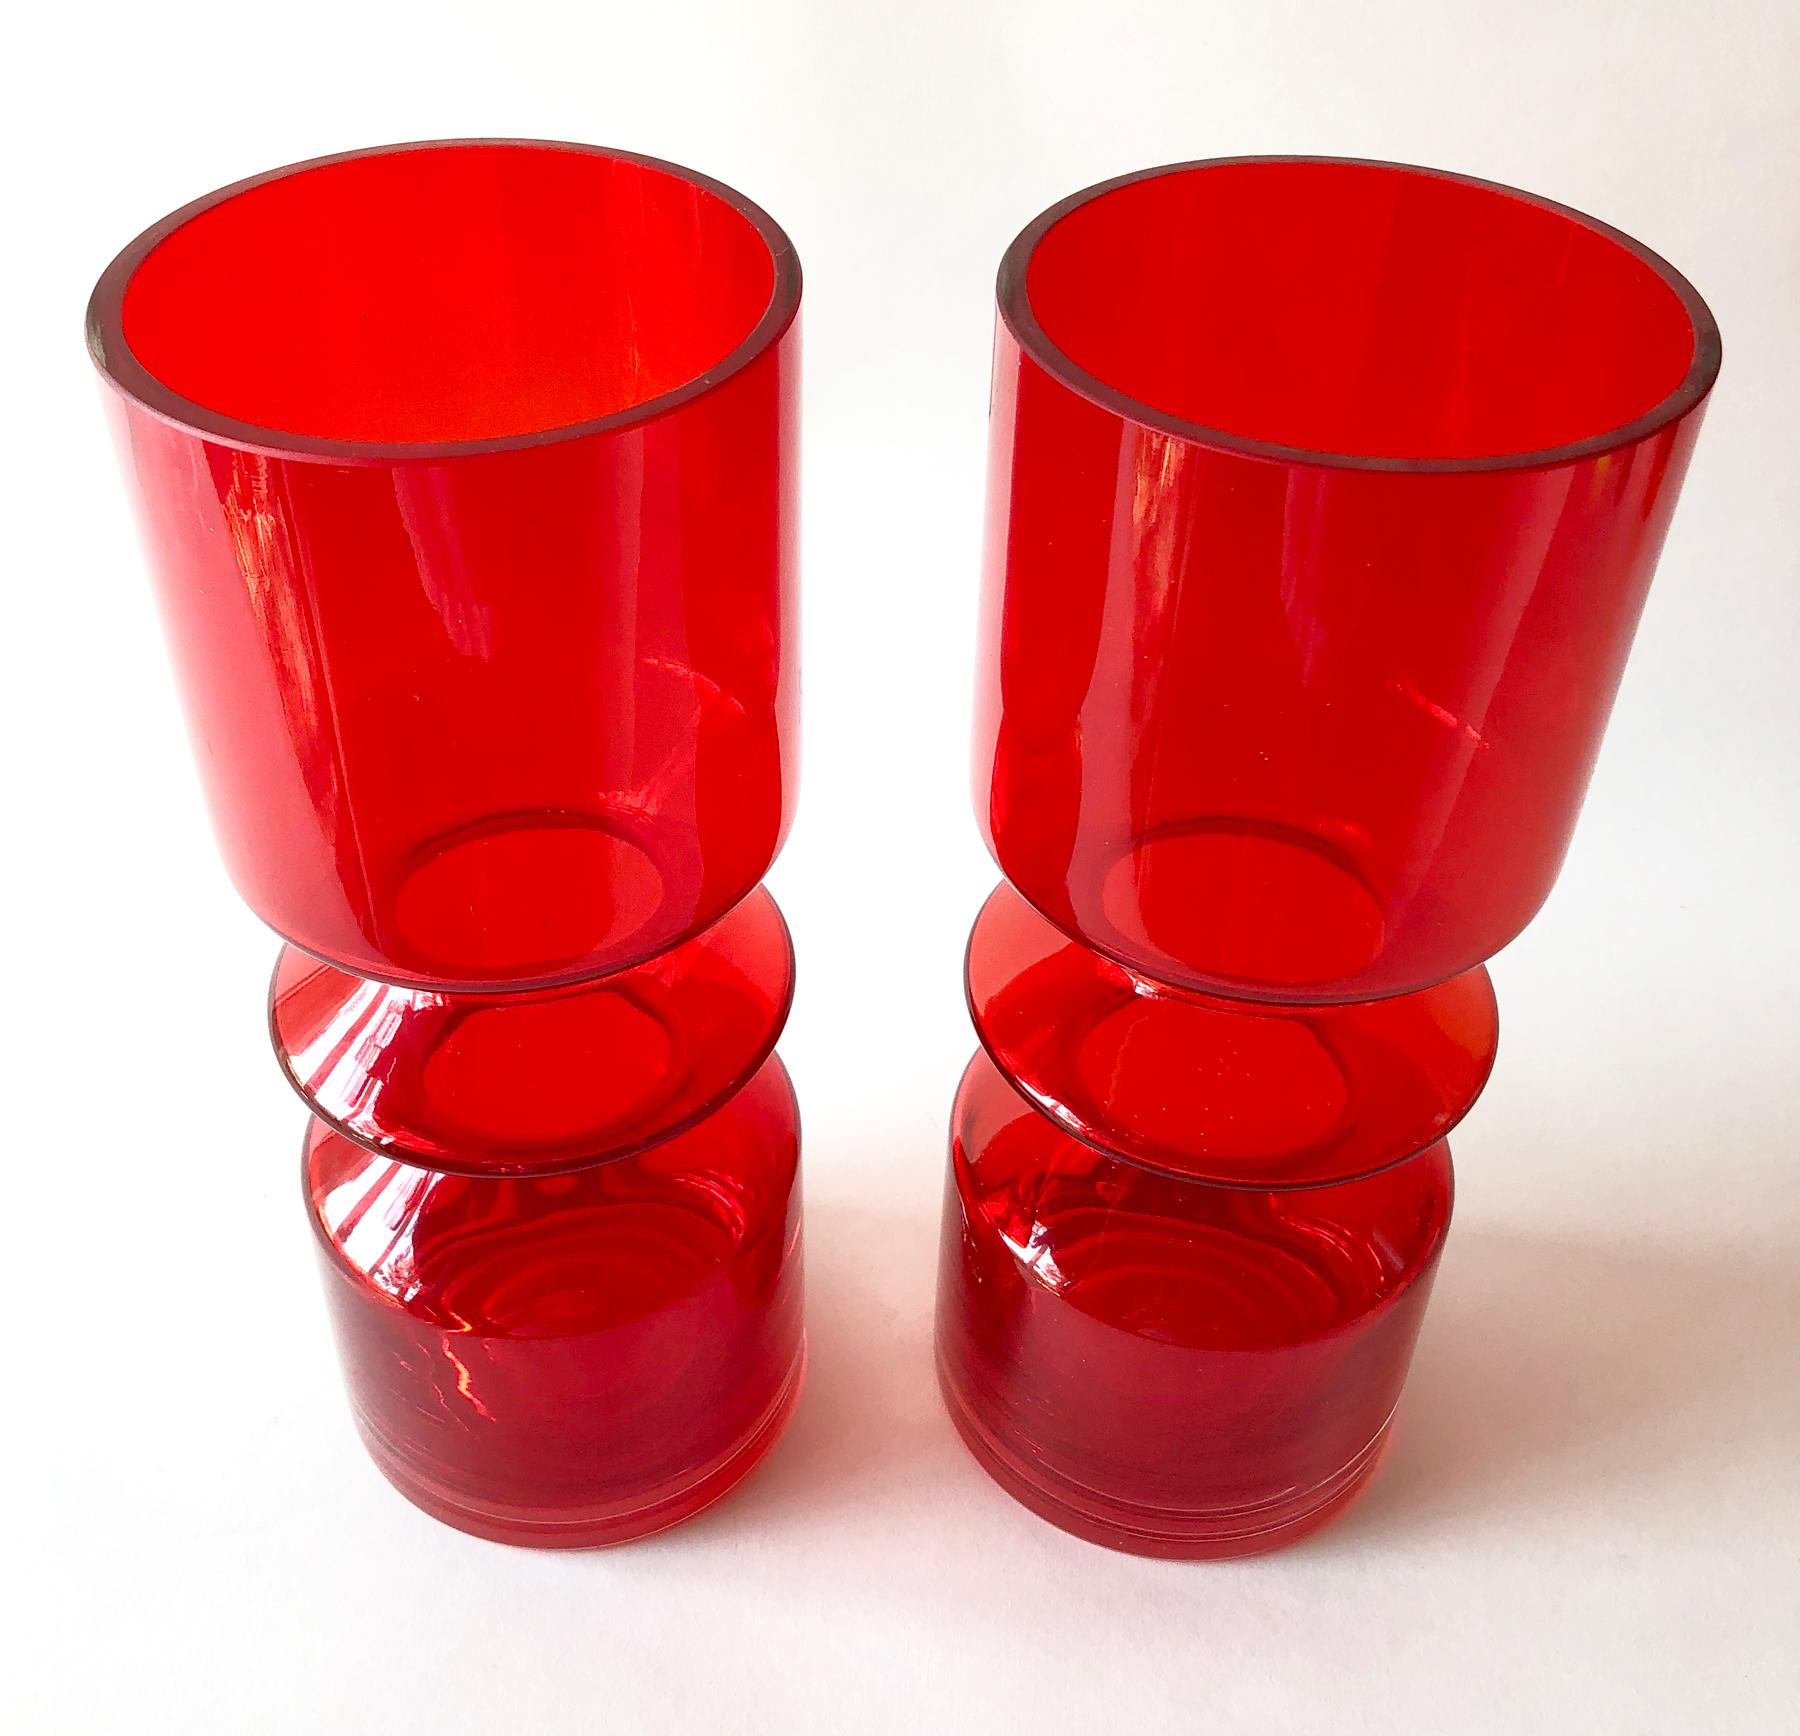 Striking pair of glass vases created by Finnish glass designer, Tamara Aladin for Rihimaki Lasi. Vases measure 12